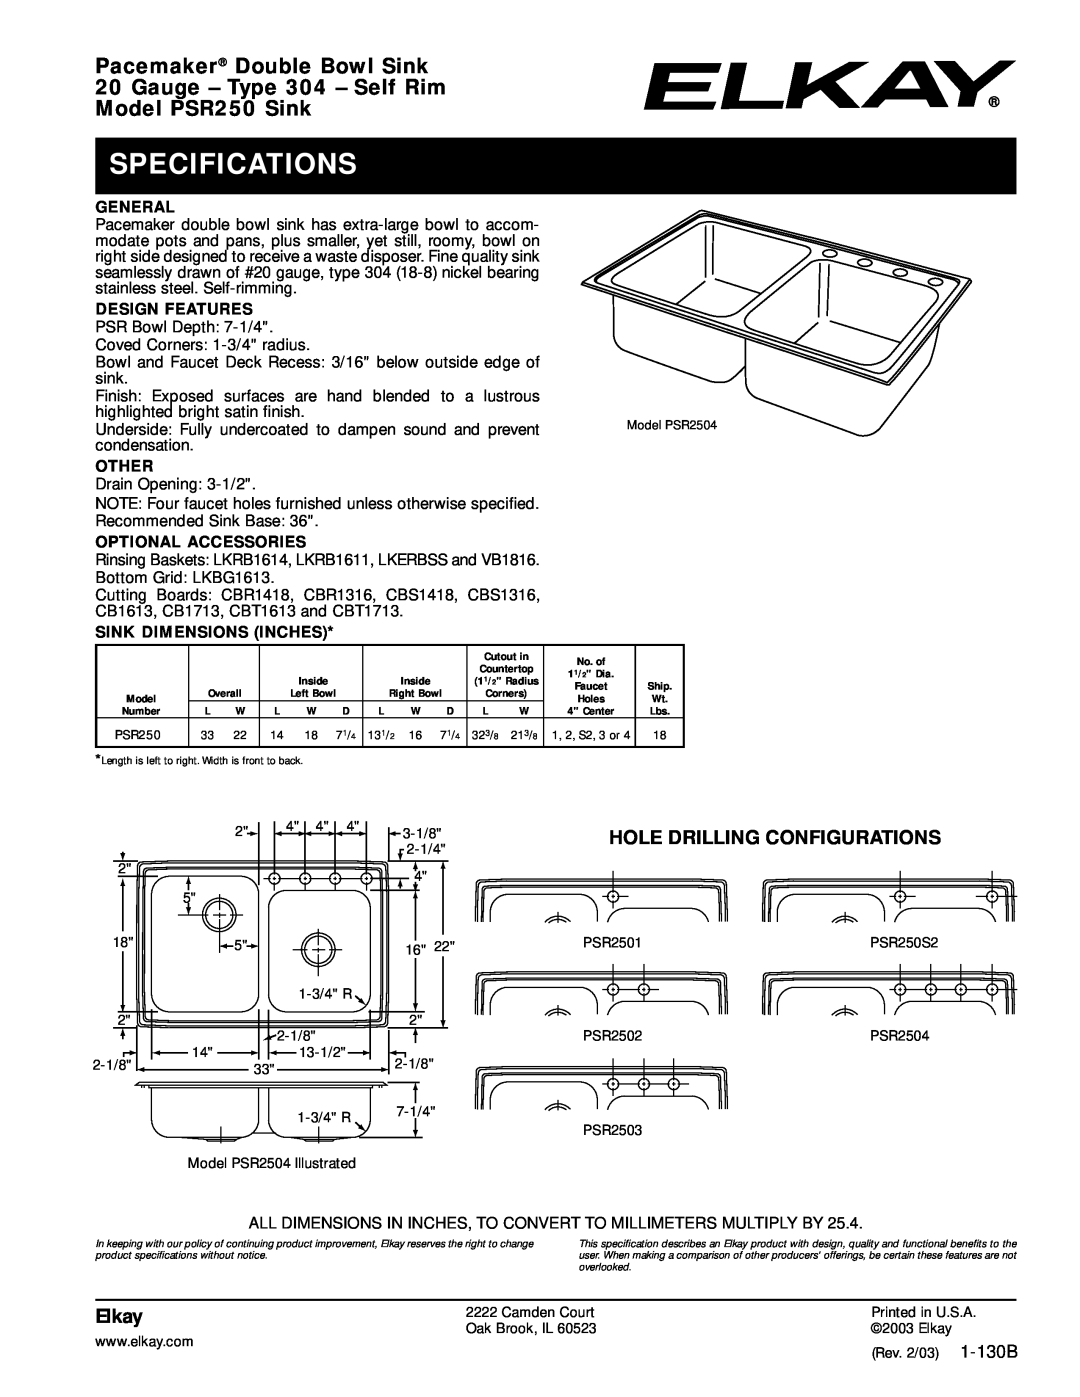 Elkay PSR250 Sink specifications Specifications, Pacemaker Double Bowl Sink, Gauge - Type 304 - Self Rim, Elkay, General 